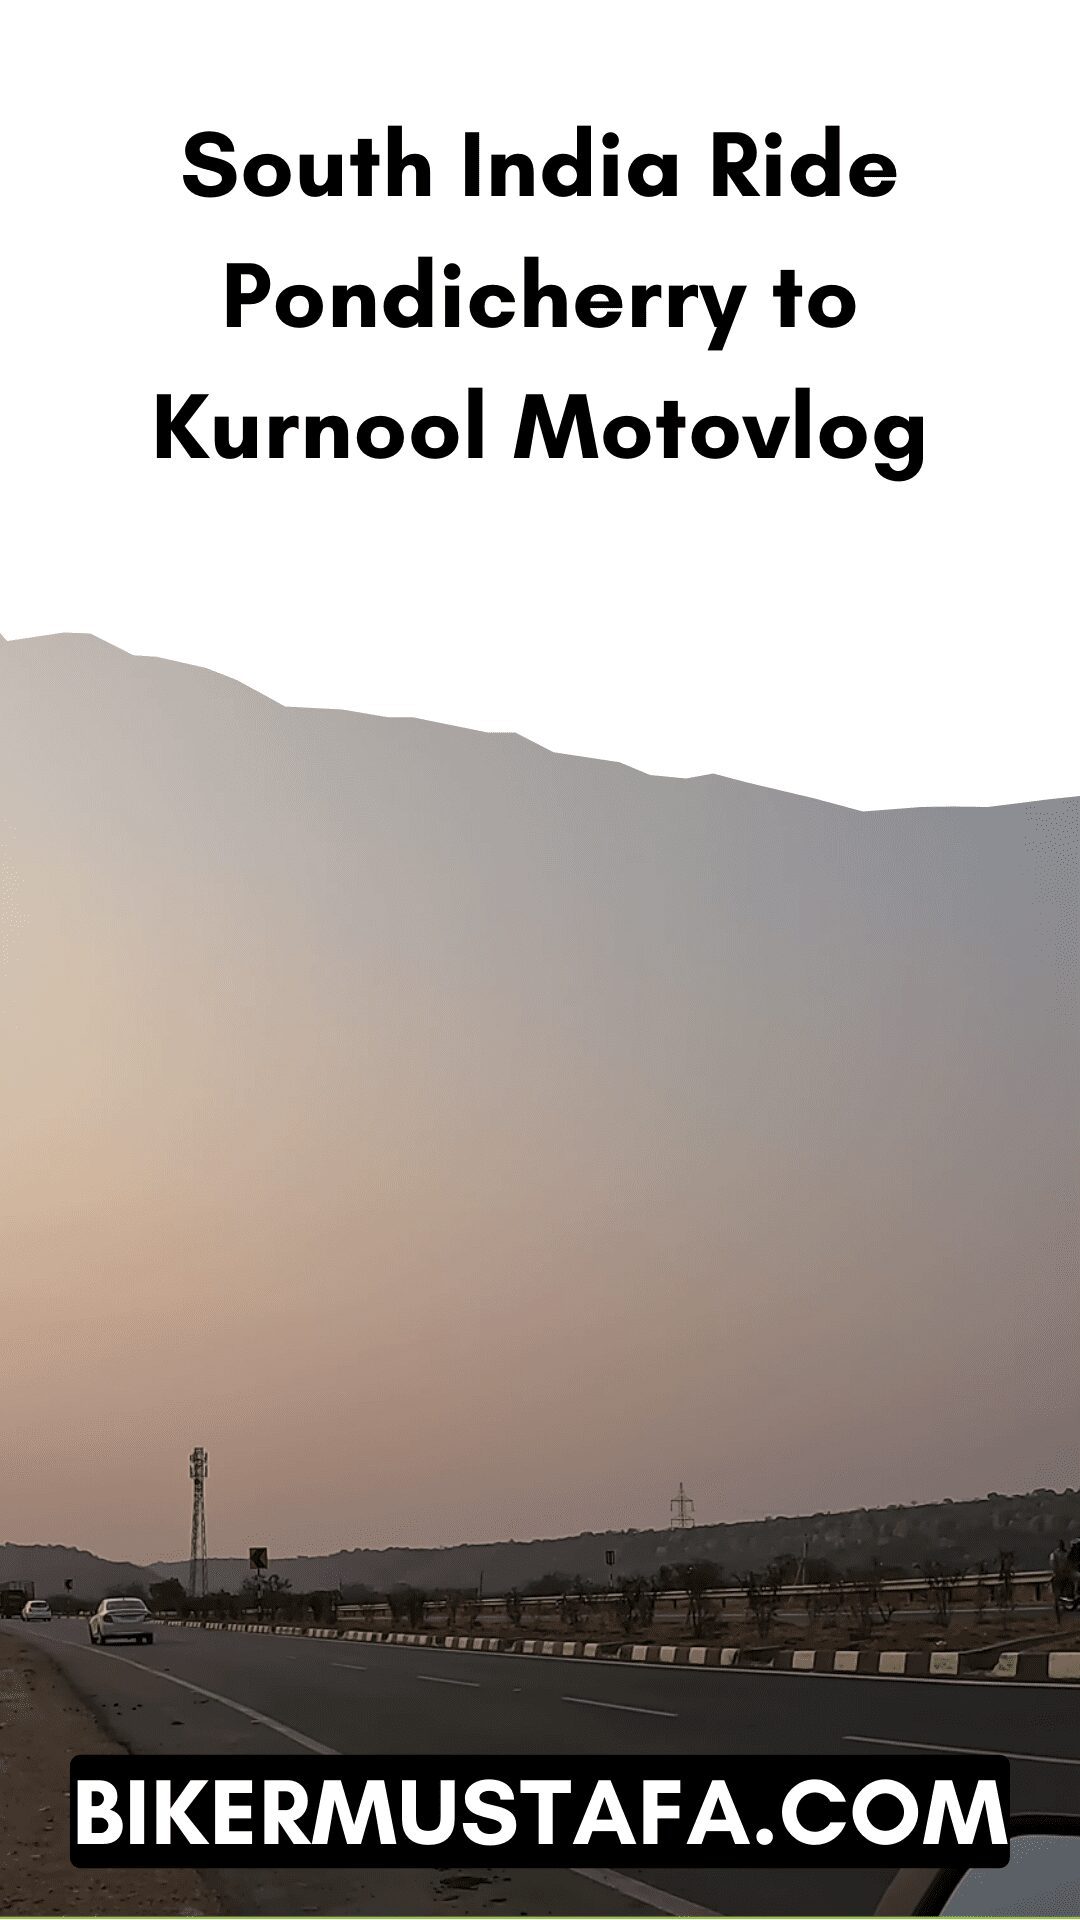 South India Ride Pondicherry to Kurnool Motovlog